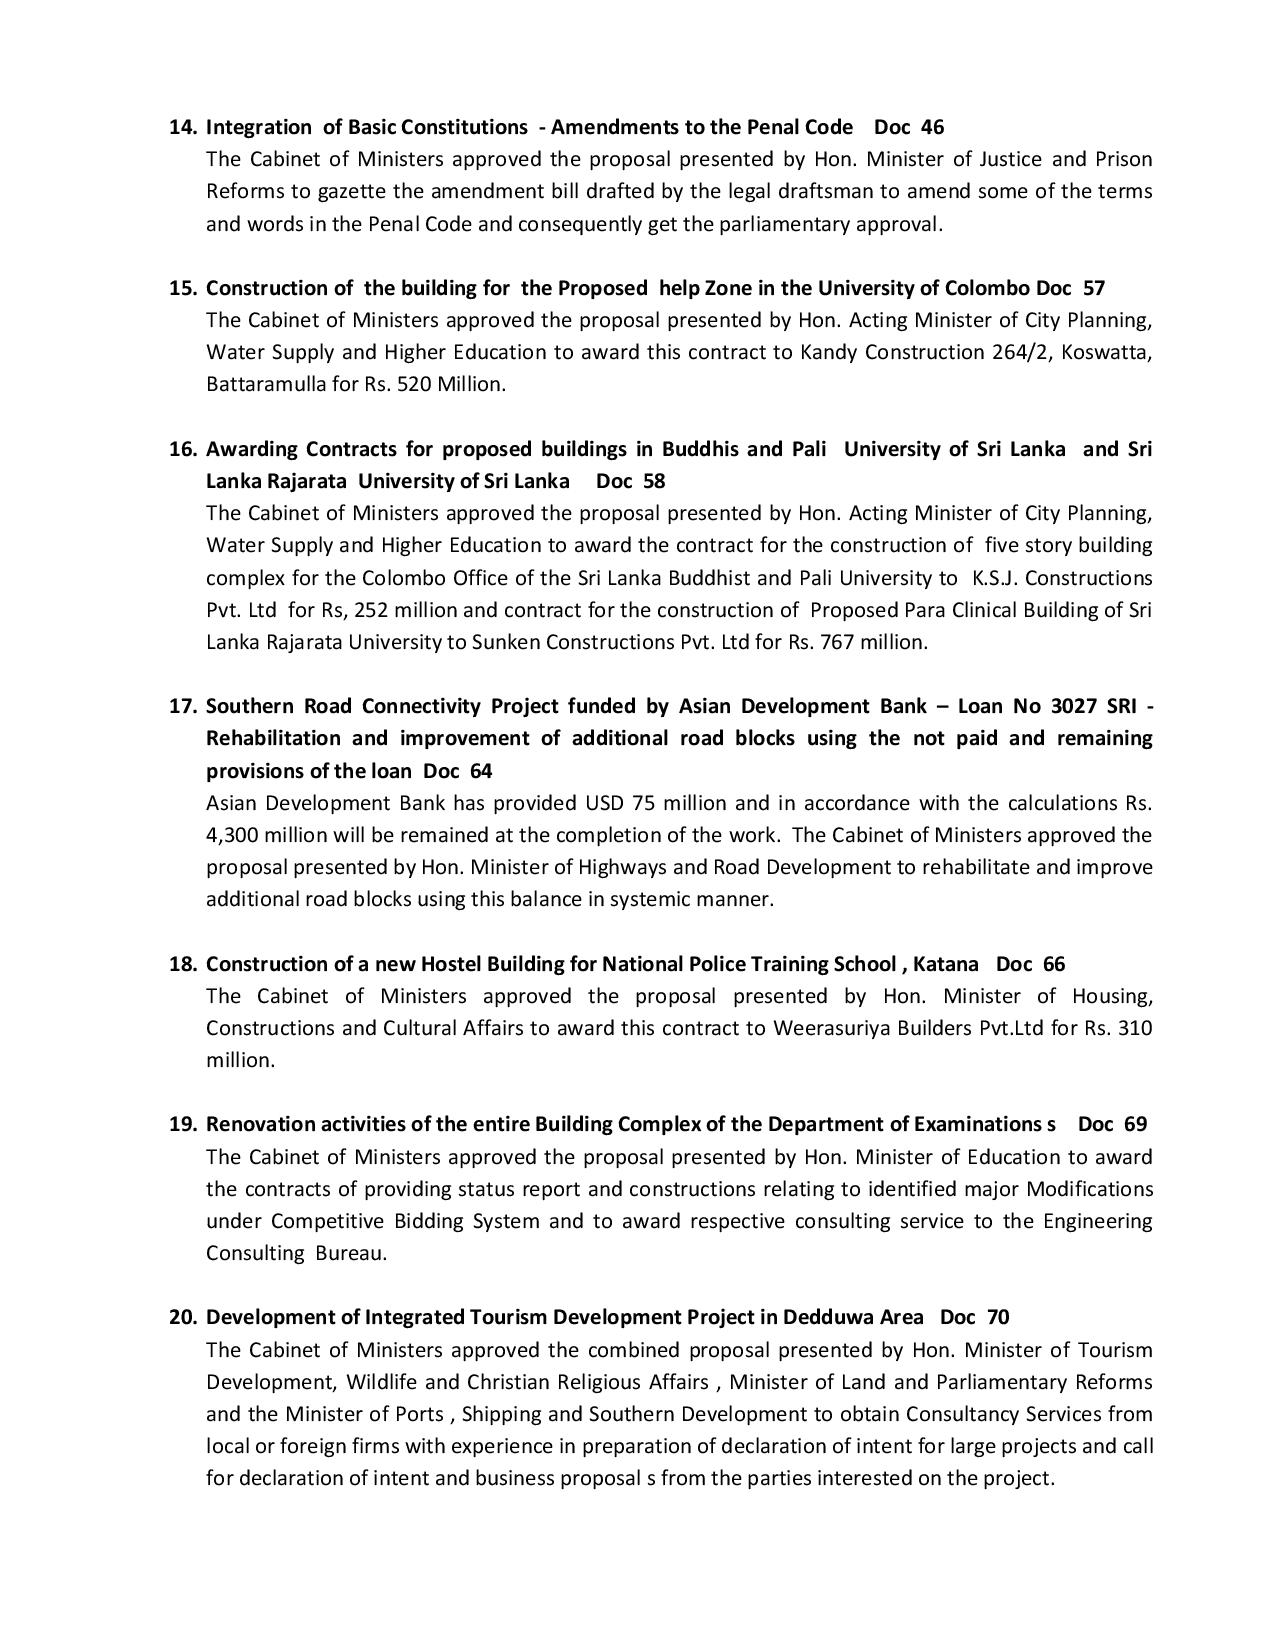 Cabinet Decisions E 30.07.2019 page 003